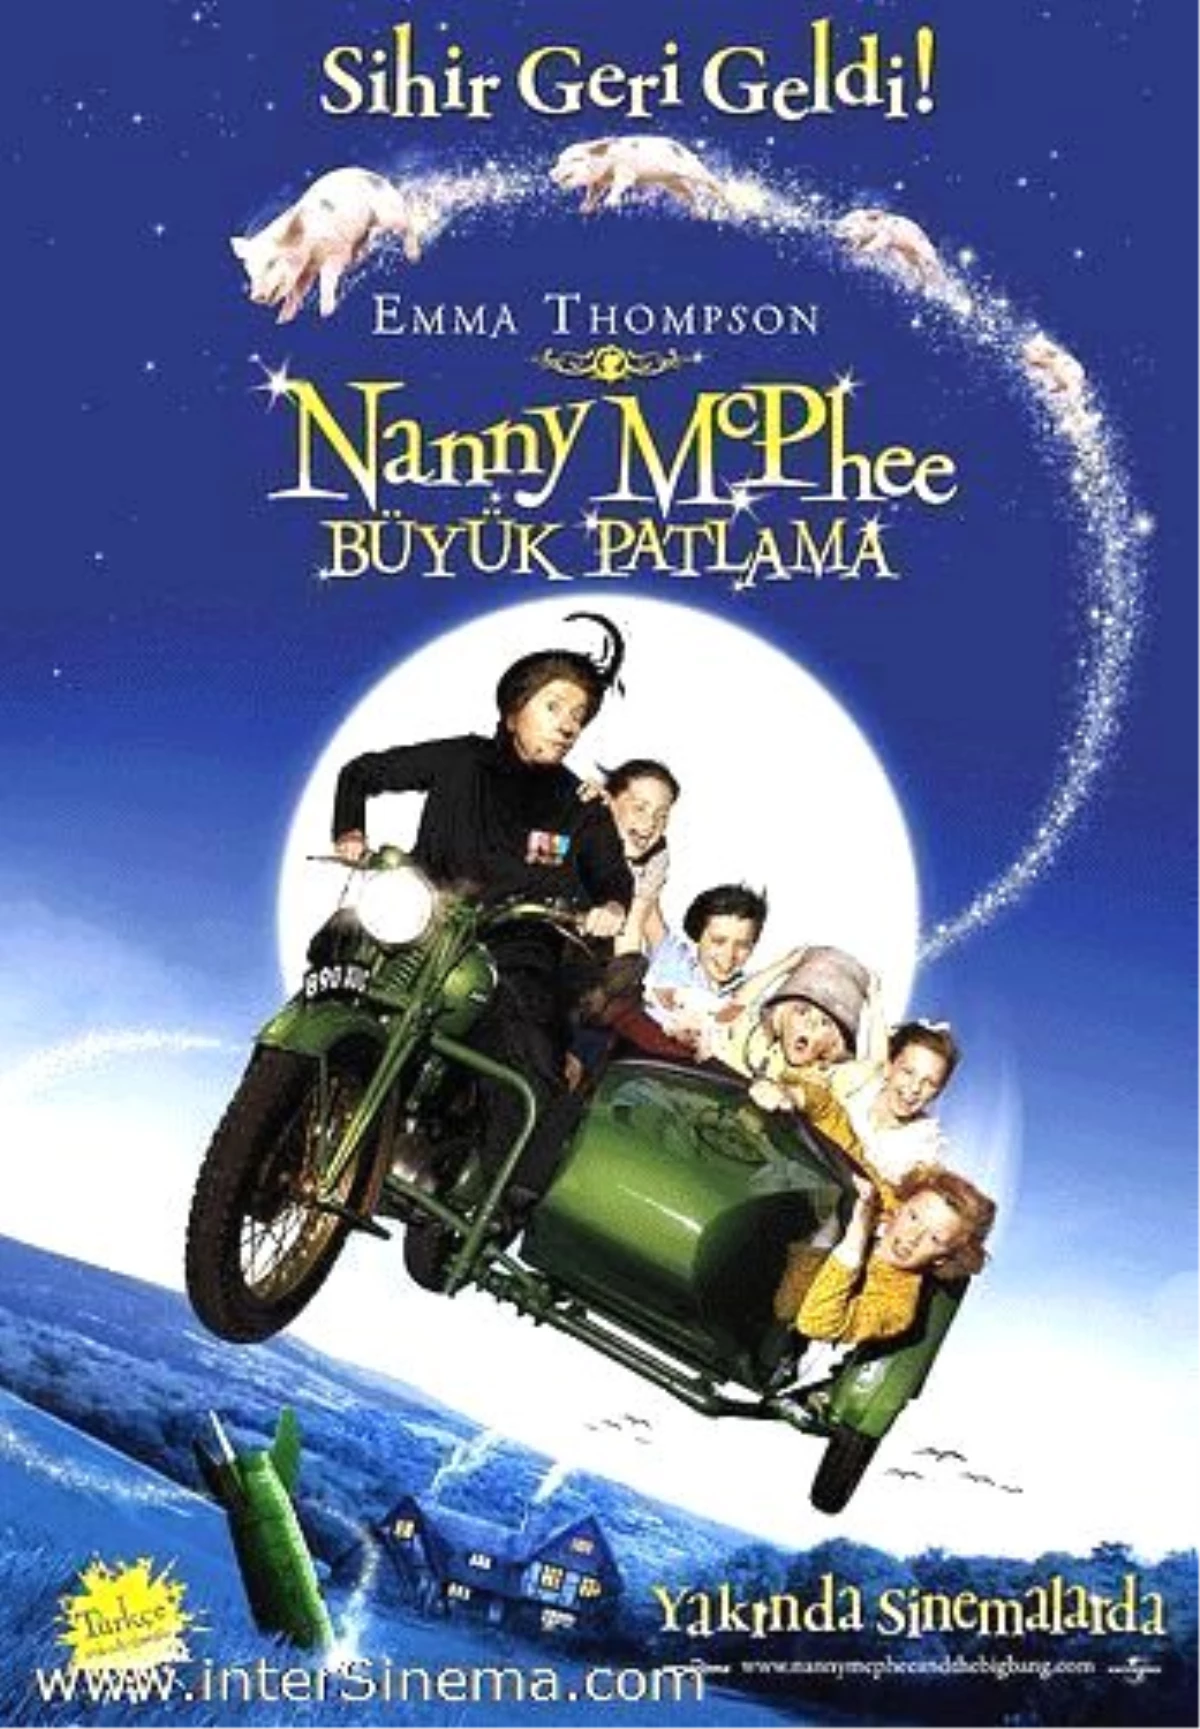 Nanny McPhee: Büyük Patlama Filmi